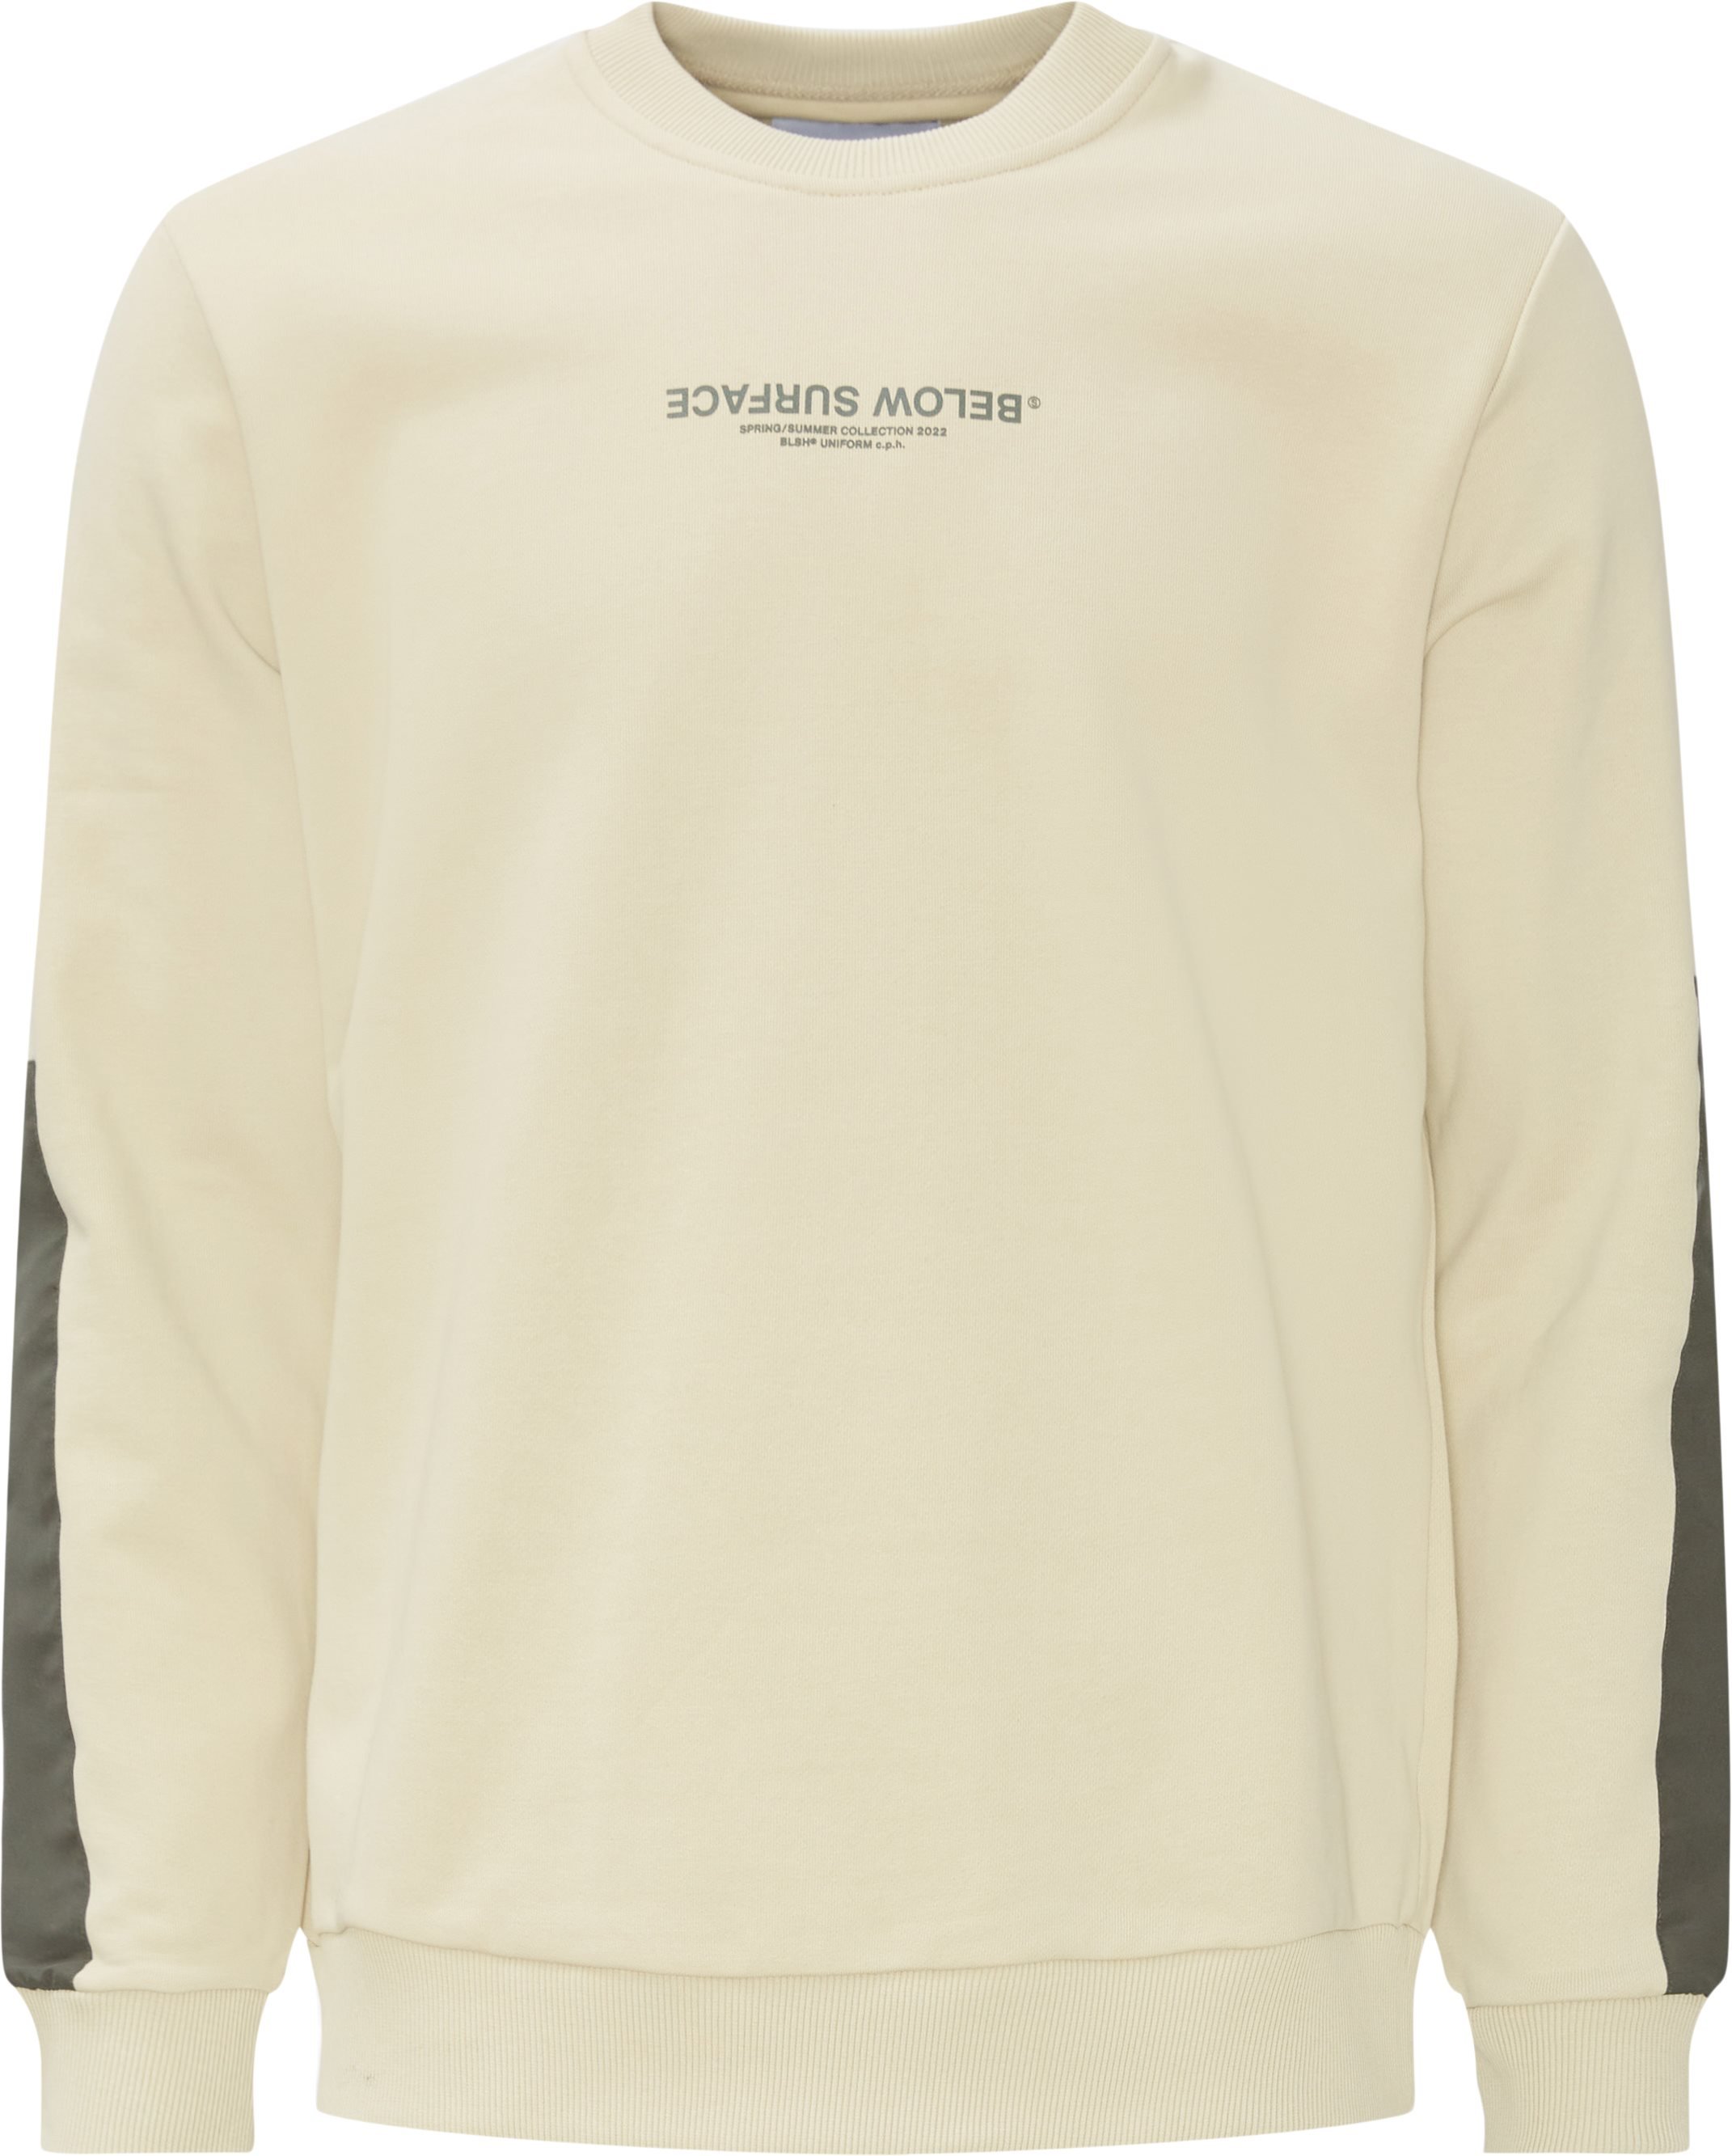 Sweatshirts - Regular fit - Sand